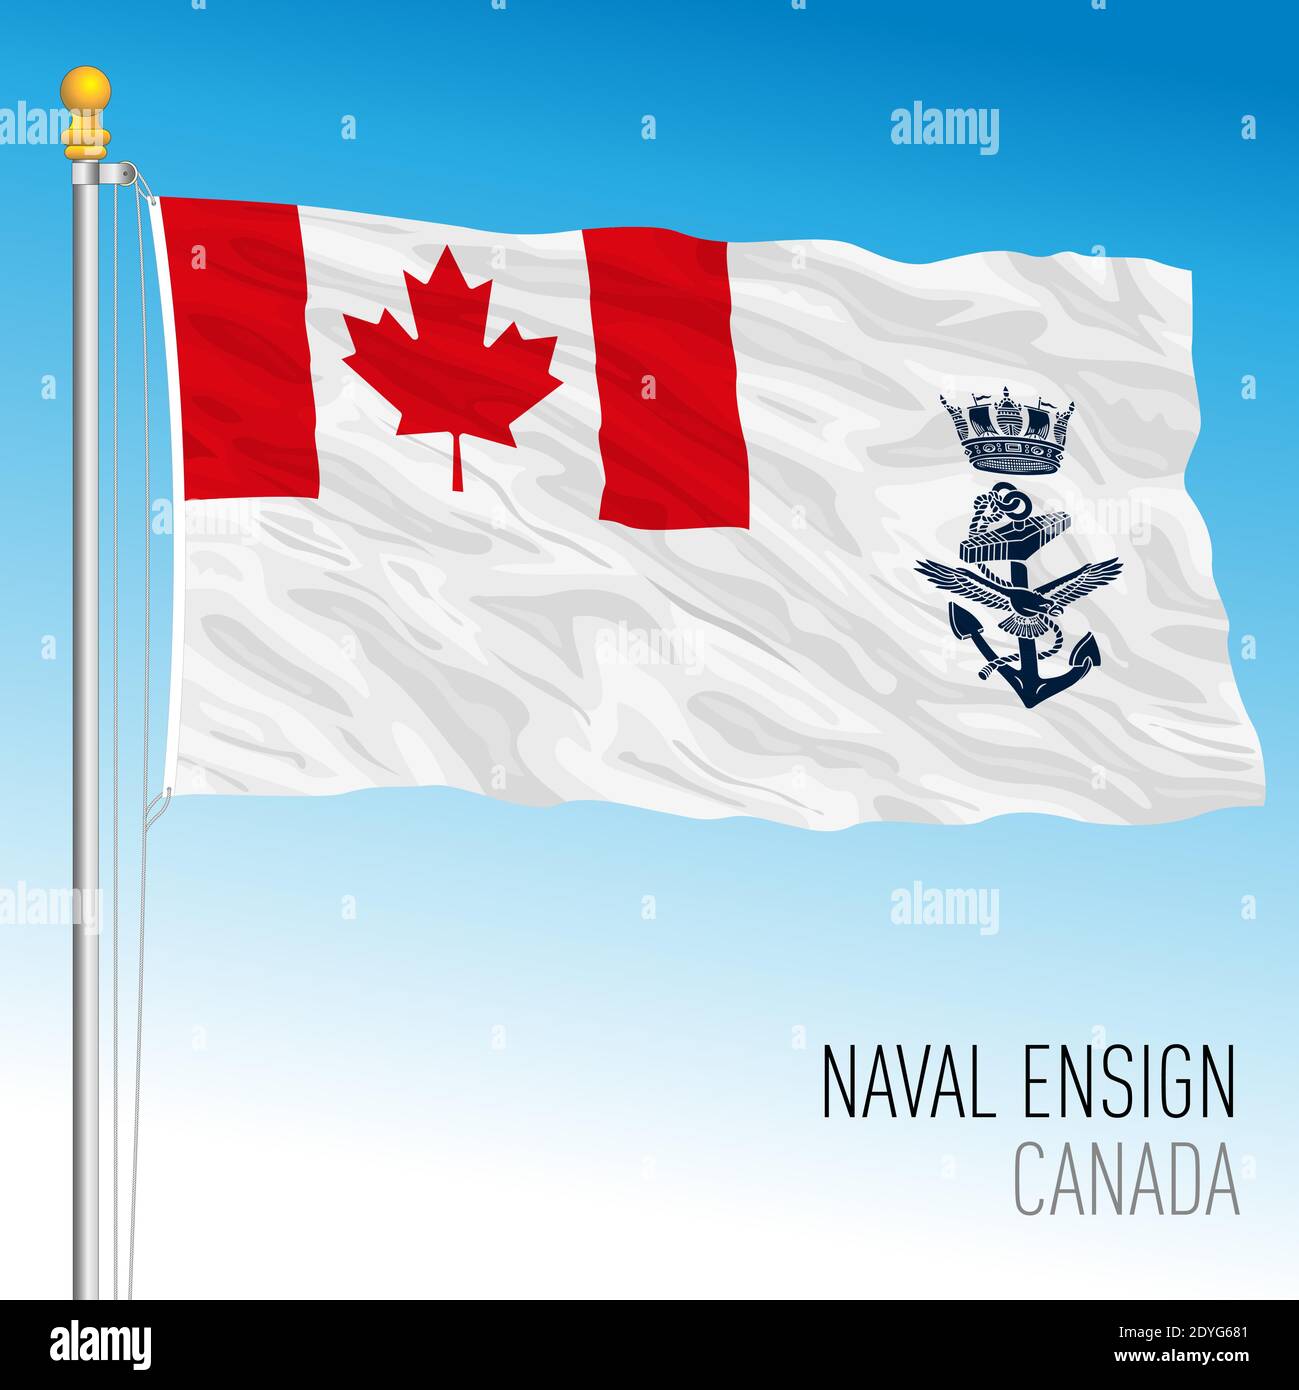 Canadian navy flag, Canada, vector illustration Stock Vector